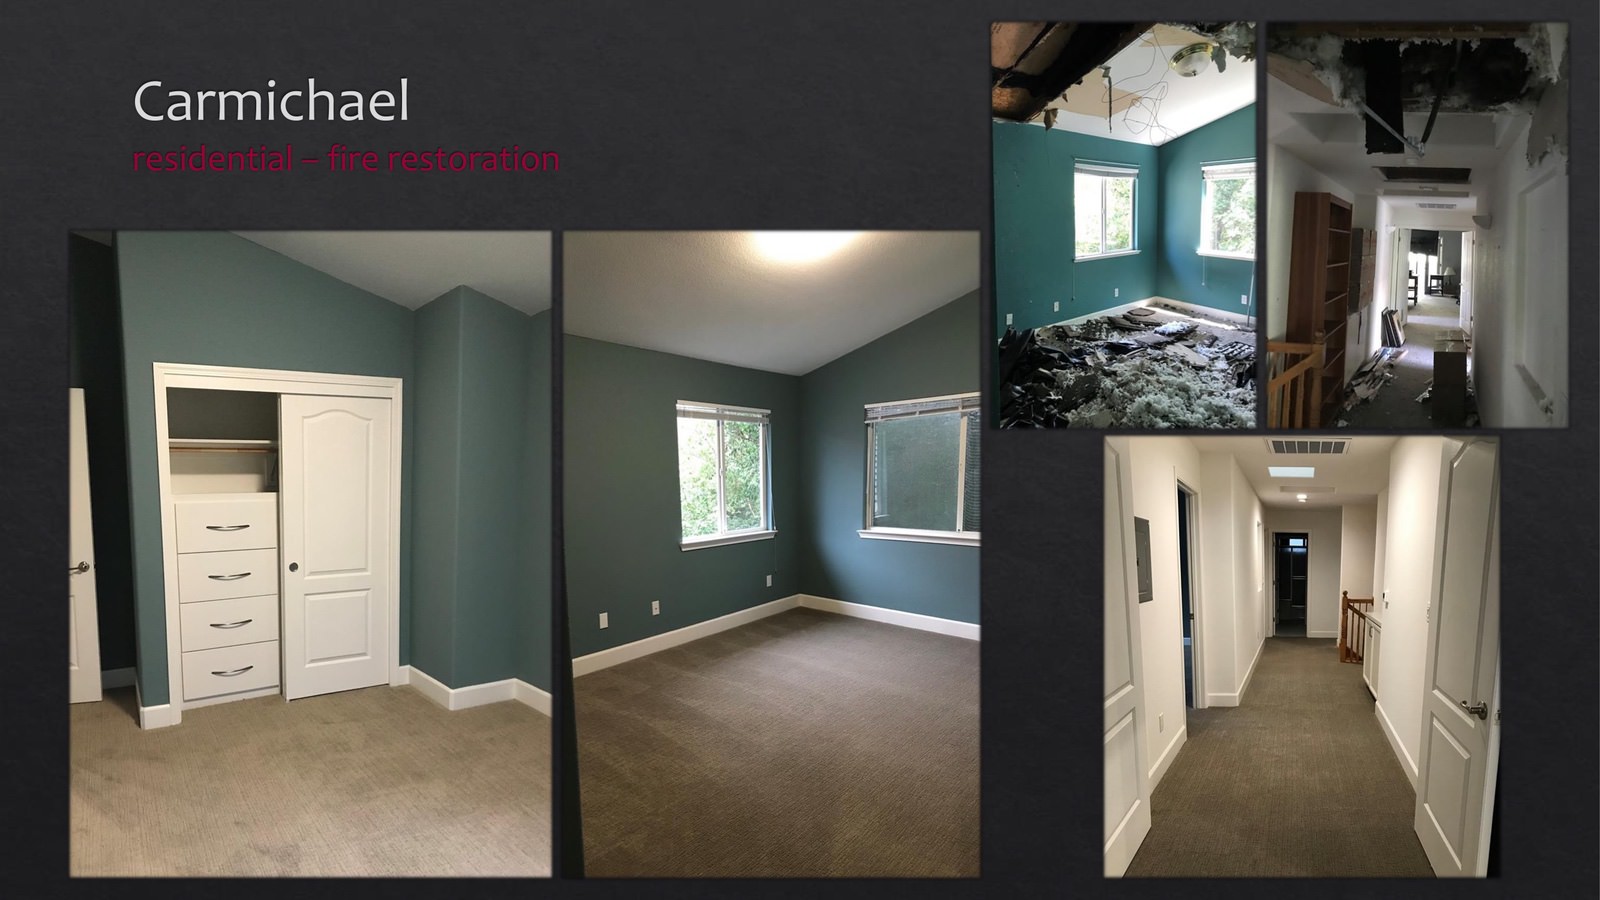 Carmichael Residential fire restoration - bedroom - lightbox